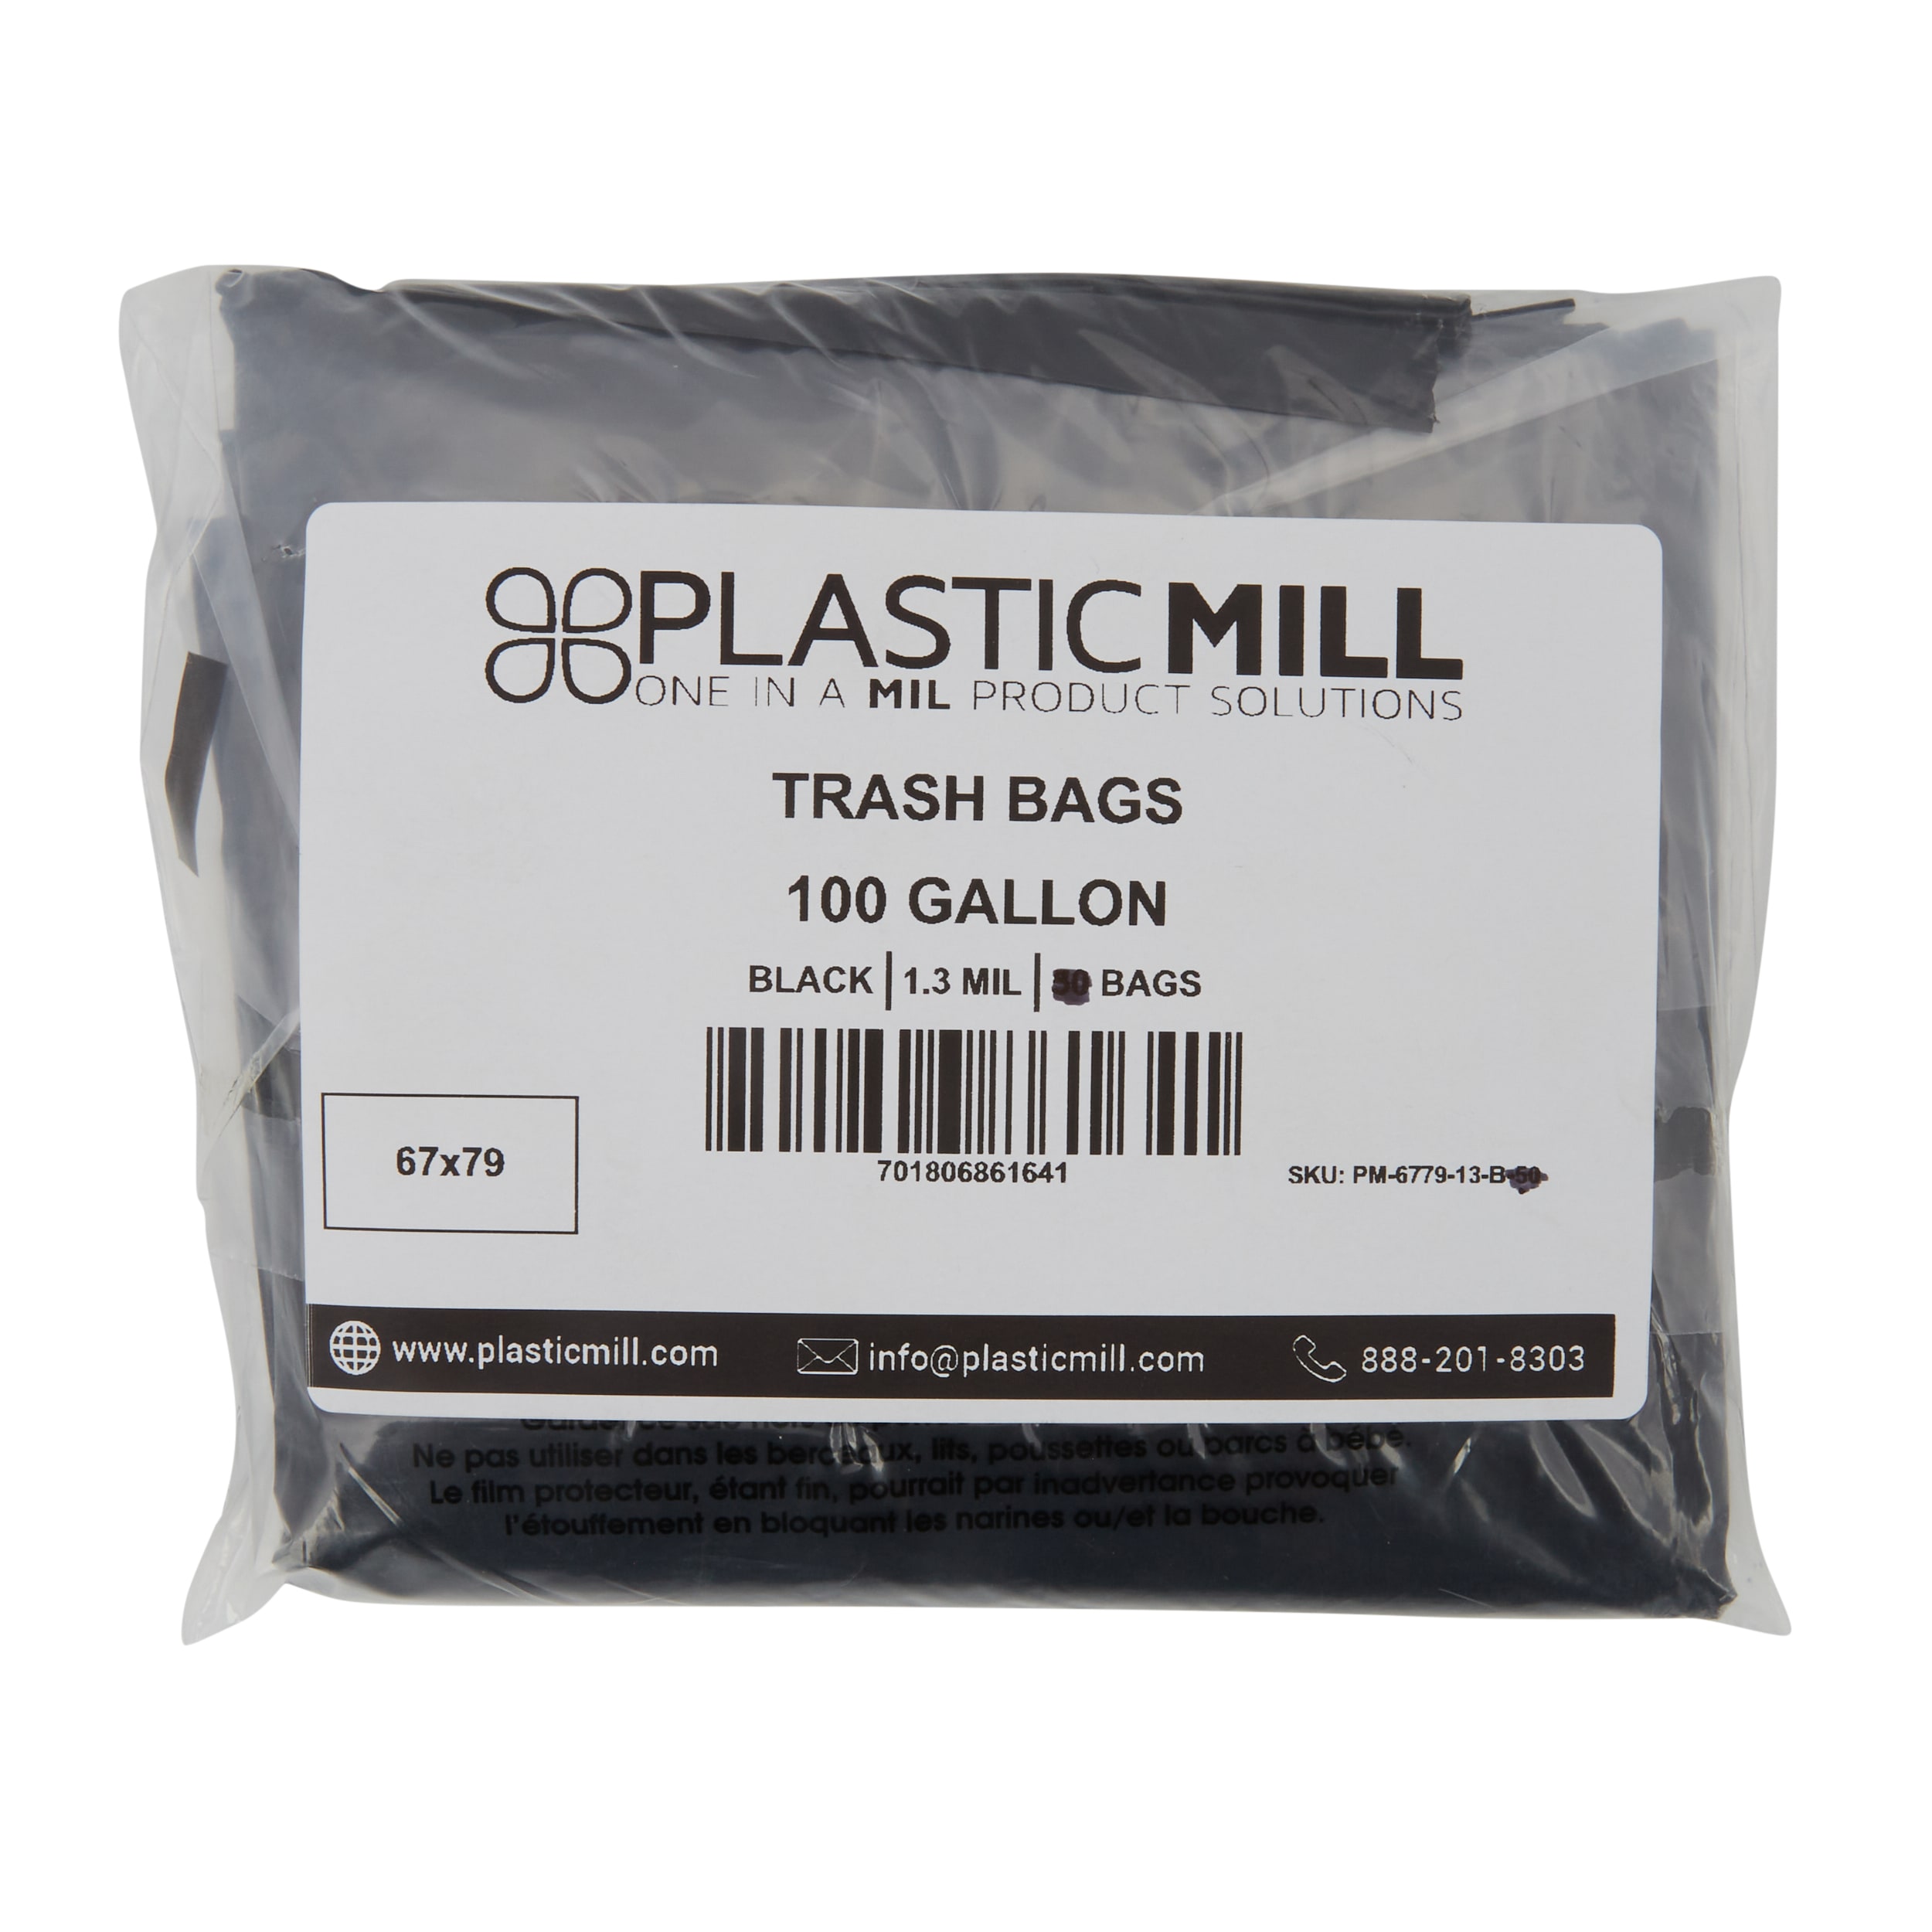 PlasticMill 100 Gallon Contractor Bags: Black, 3 mil, 67x79, 10 Bags.